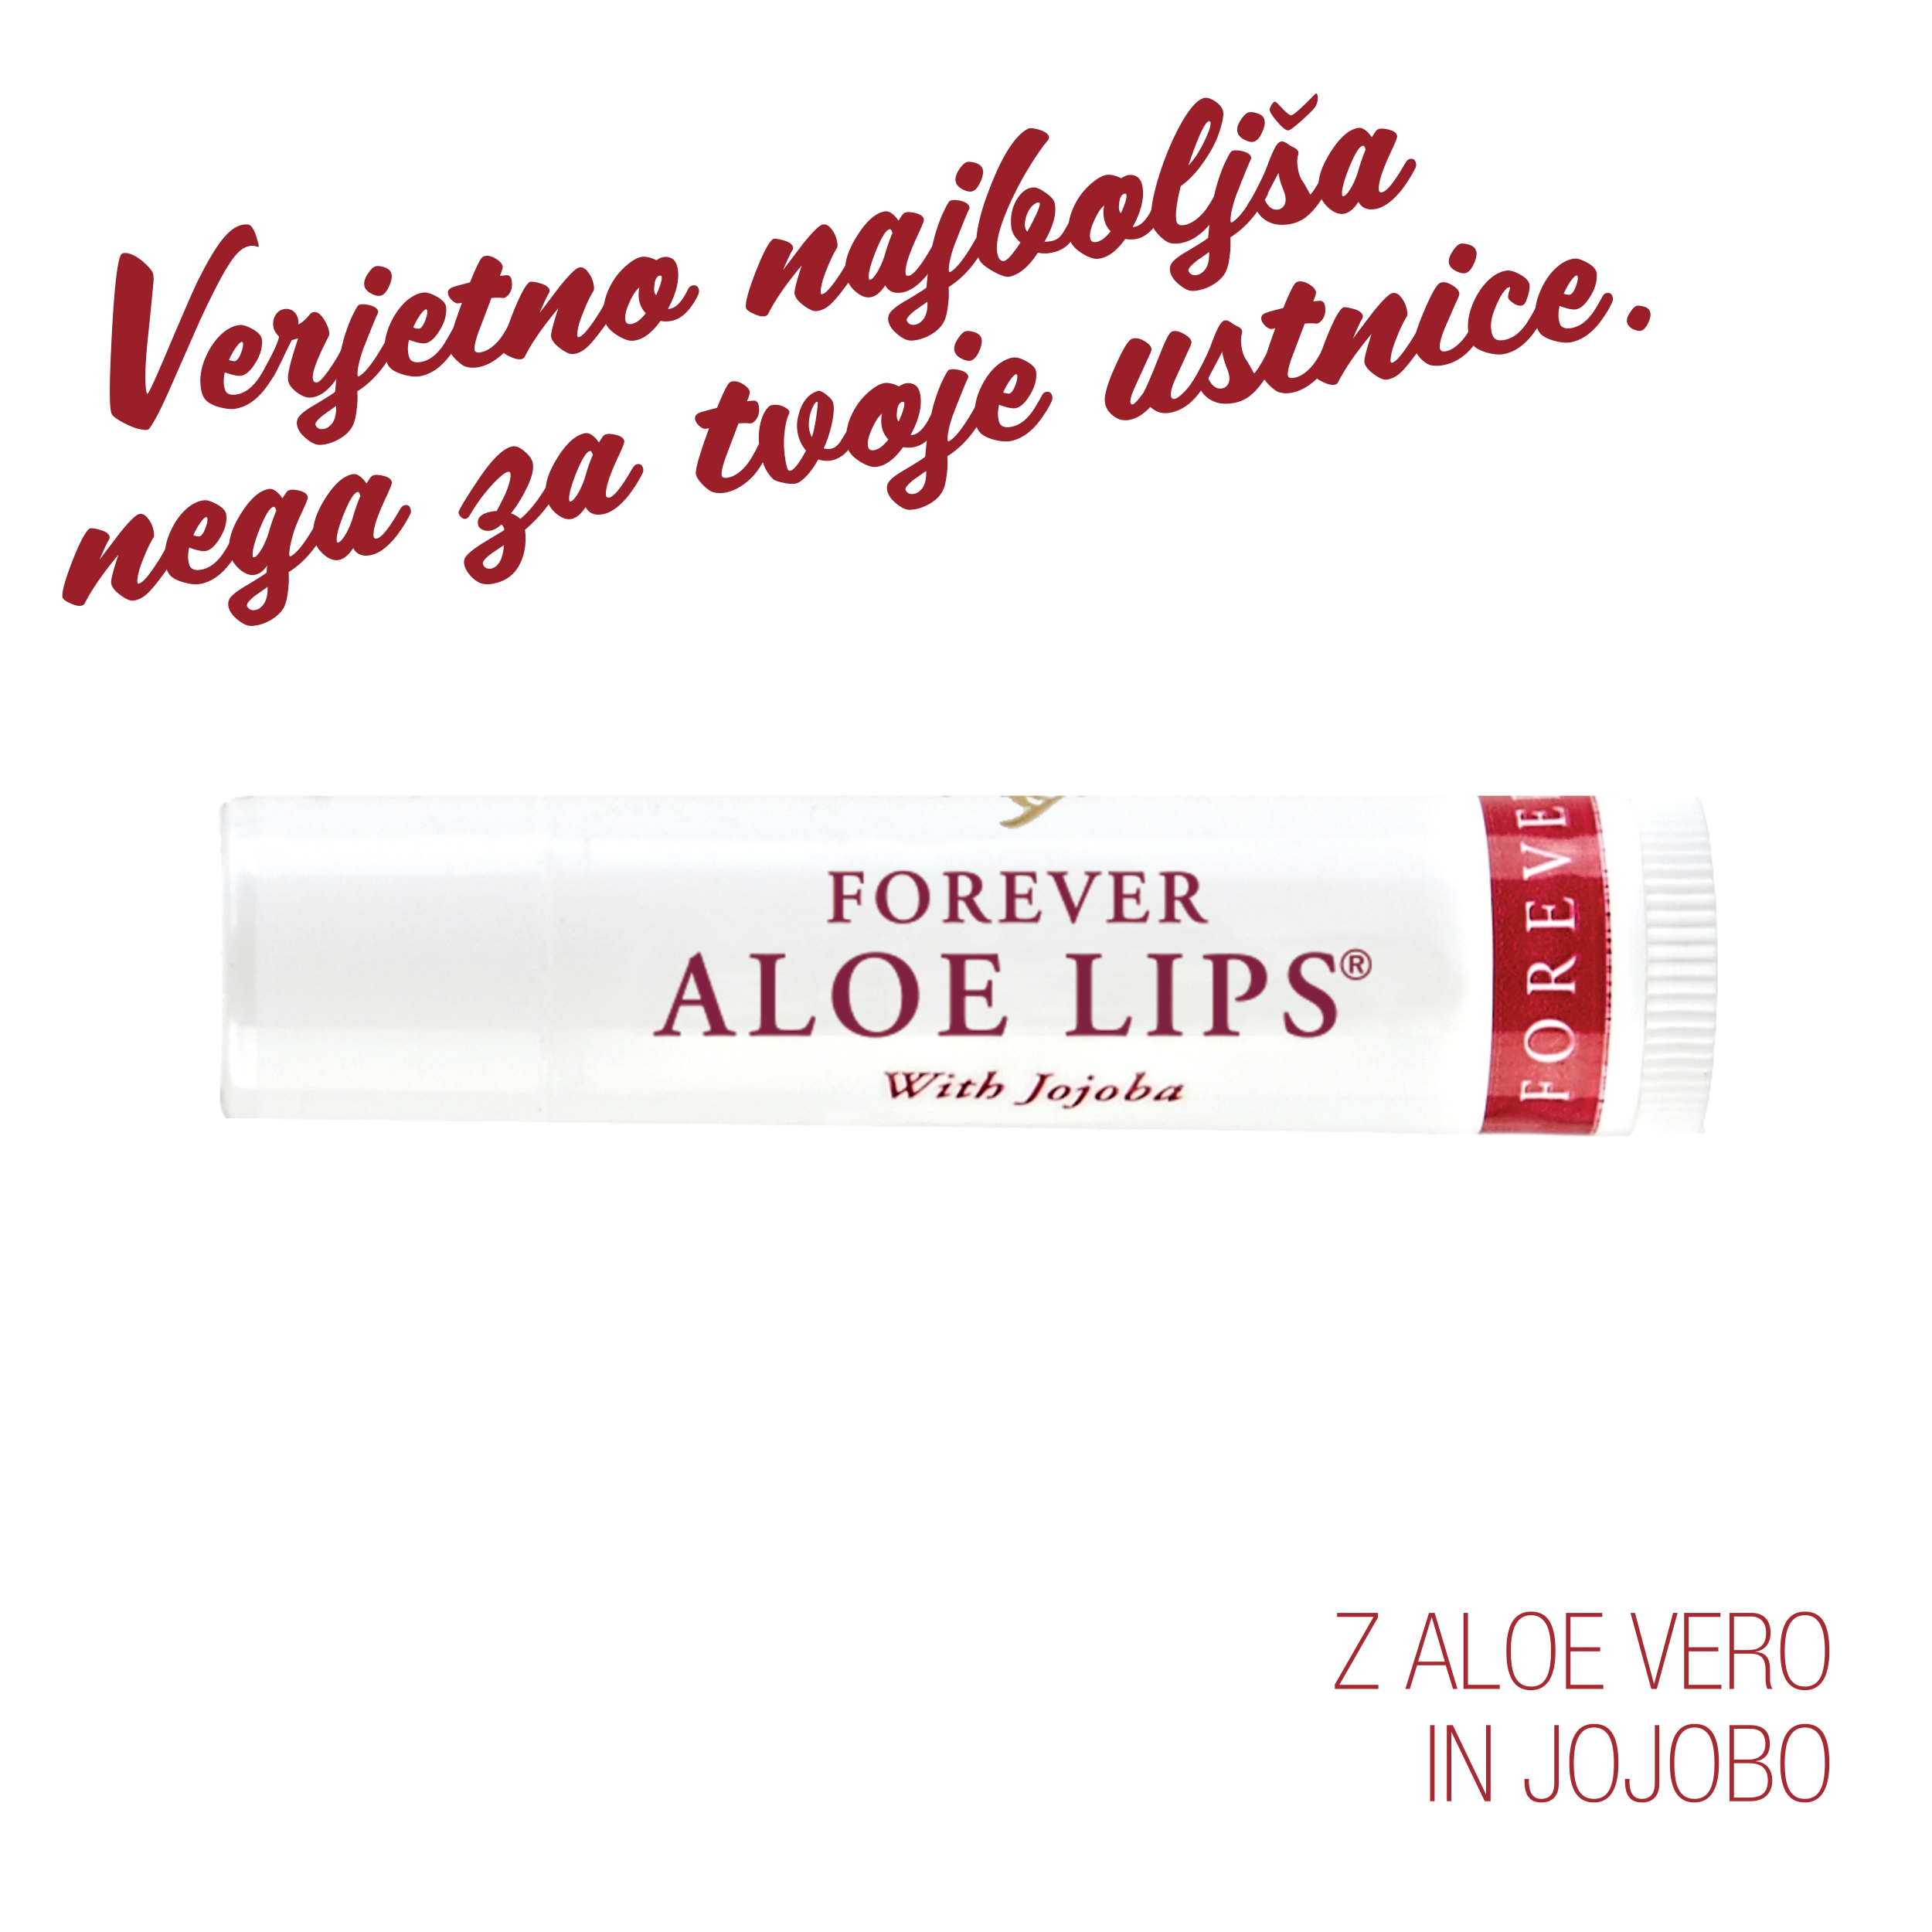 Aloe Lips with Jojoba 